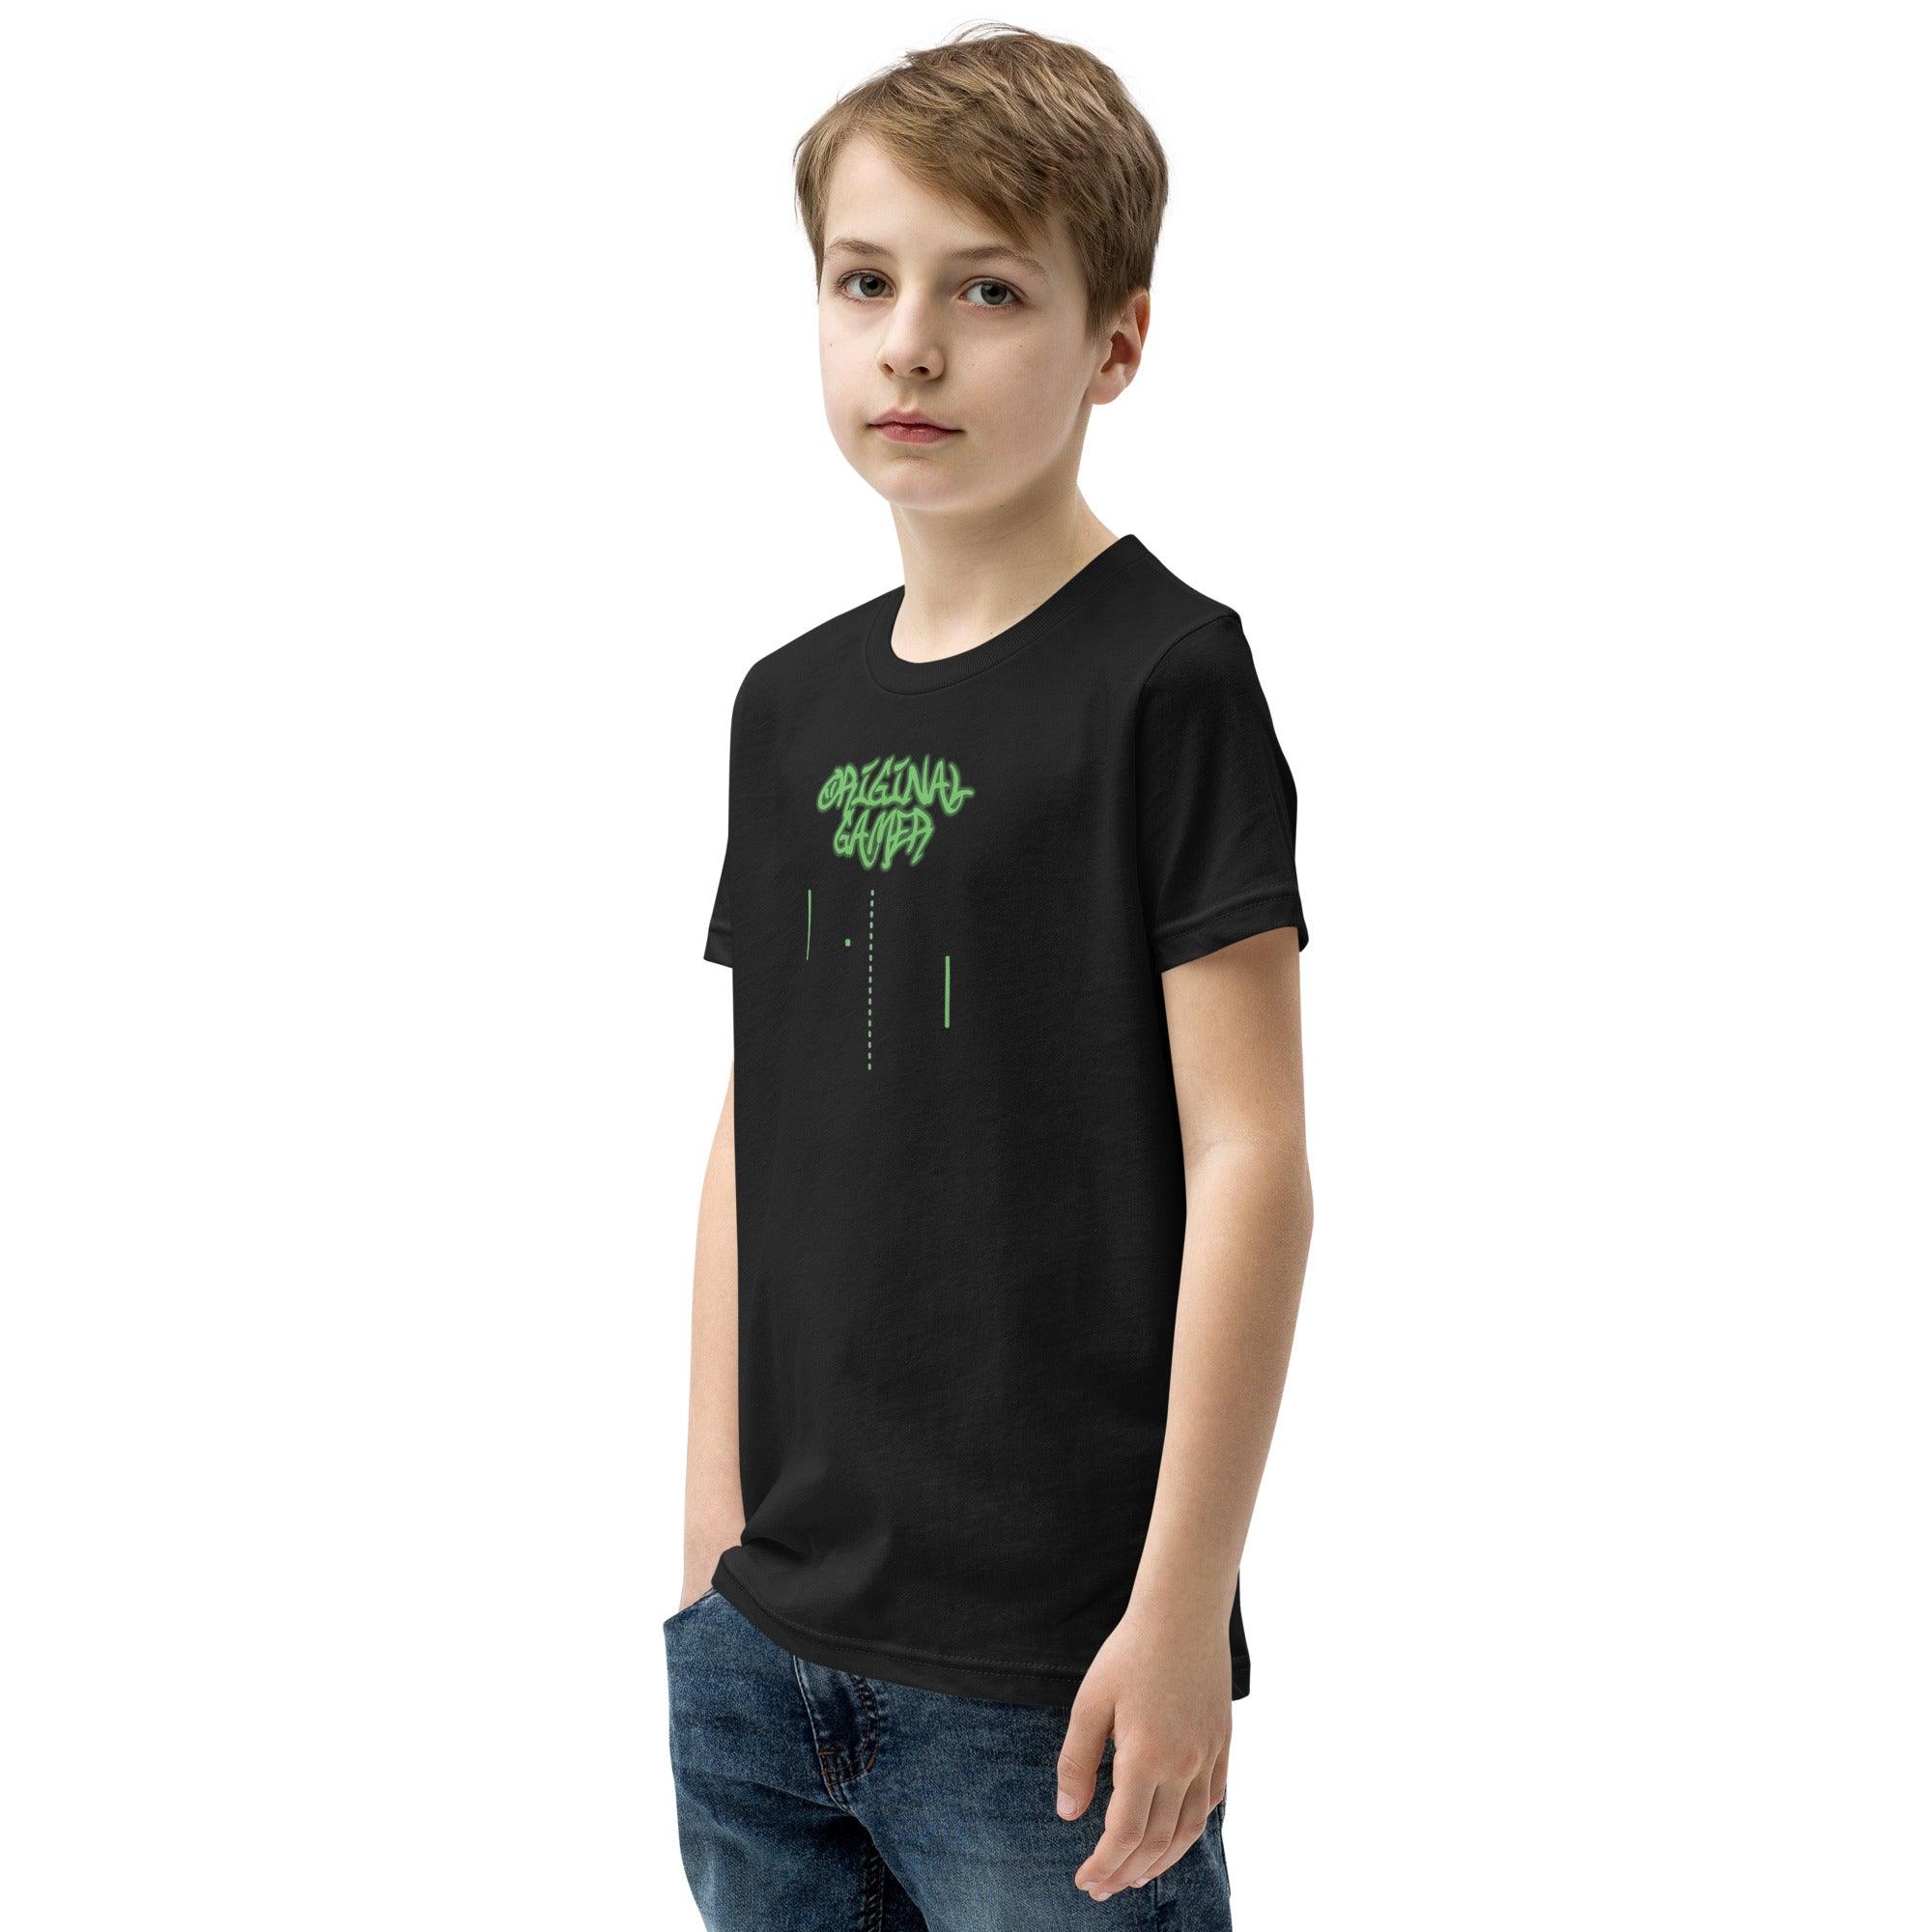 OG (Original Gamer) Youth Short Sleeve T-Shirt